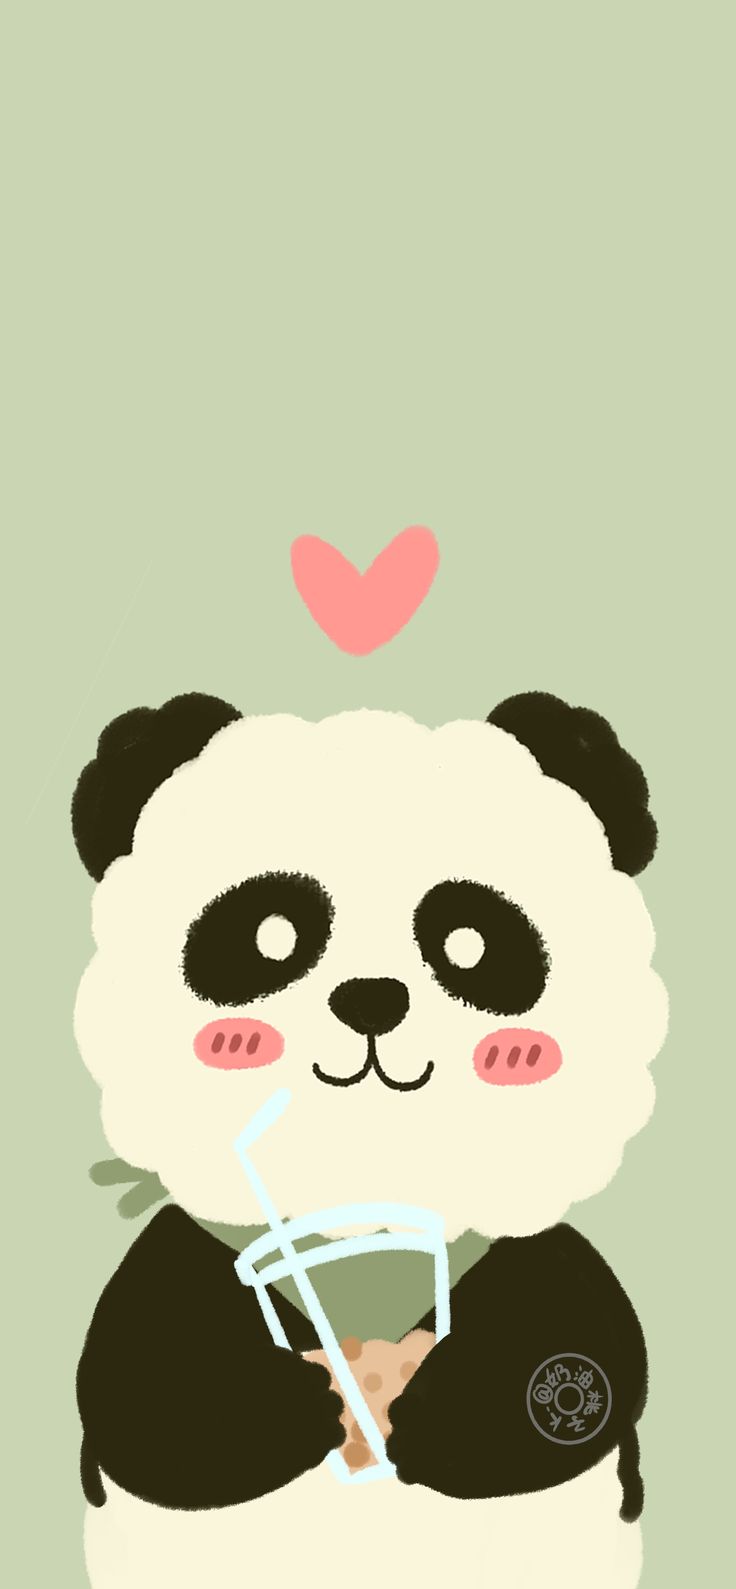 A cute picture of a panda drinking tea - Panda